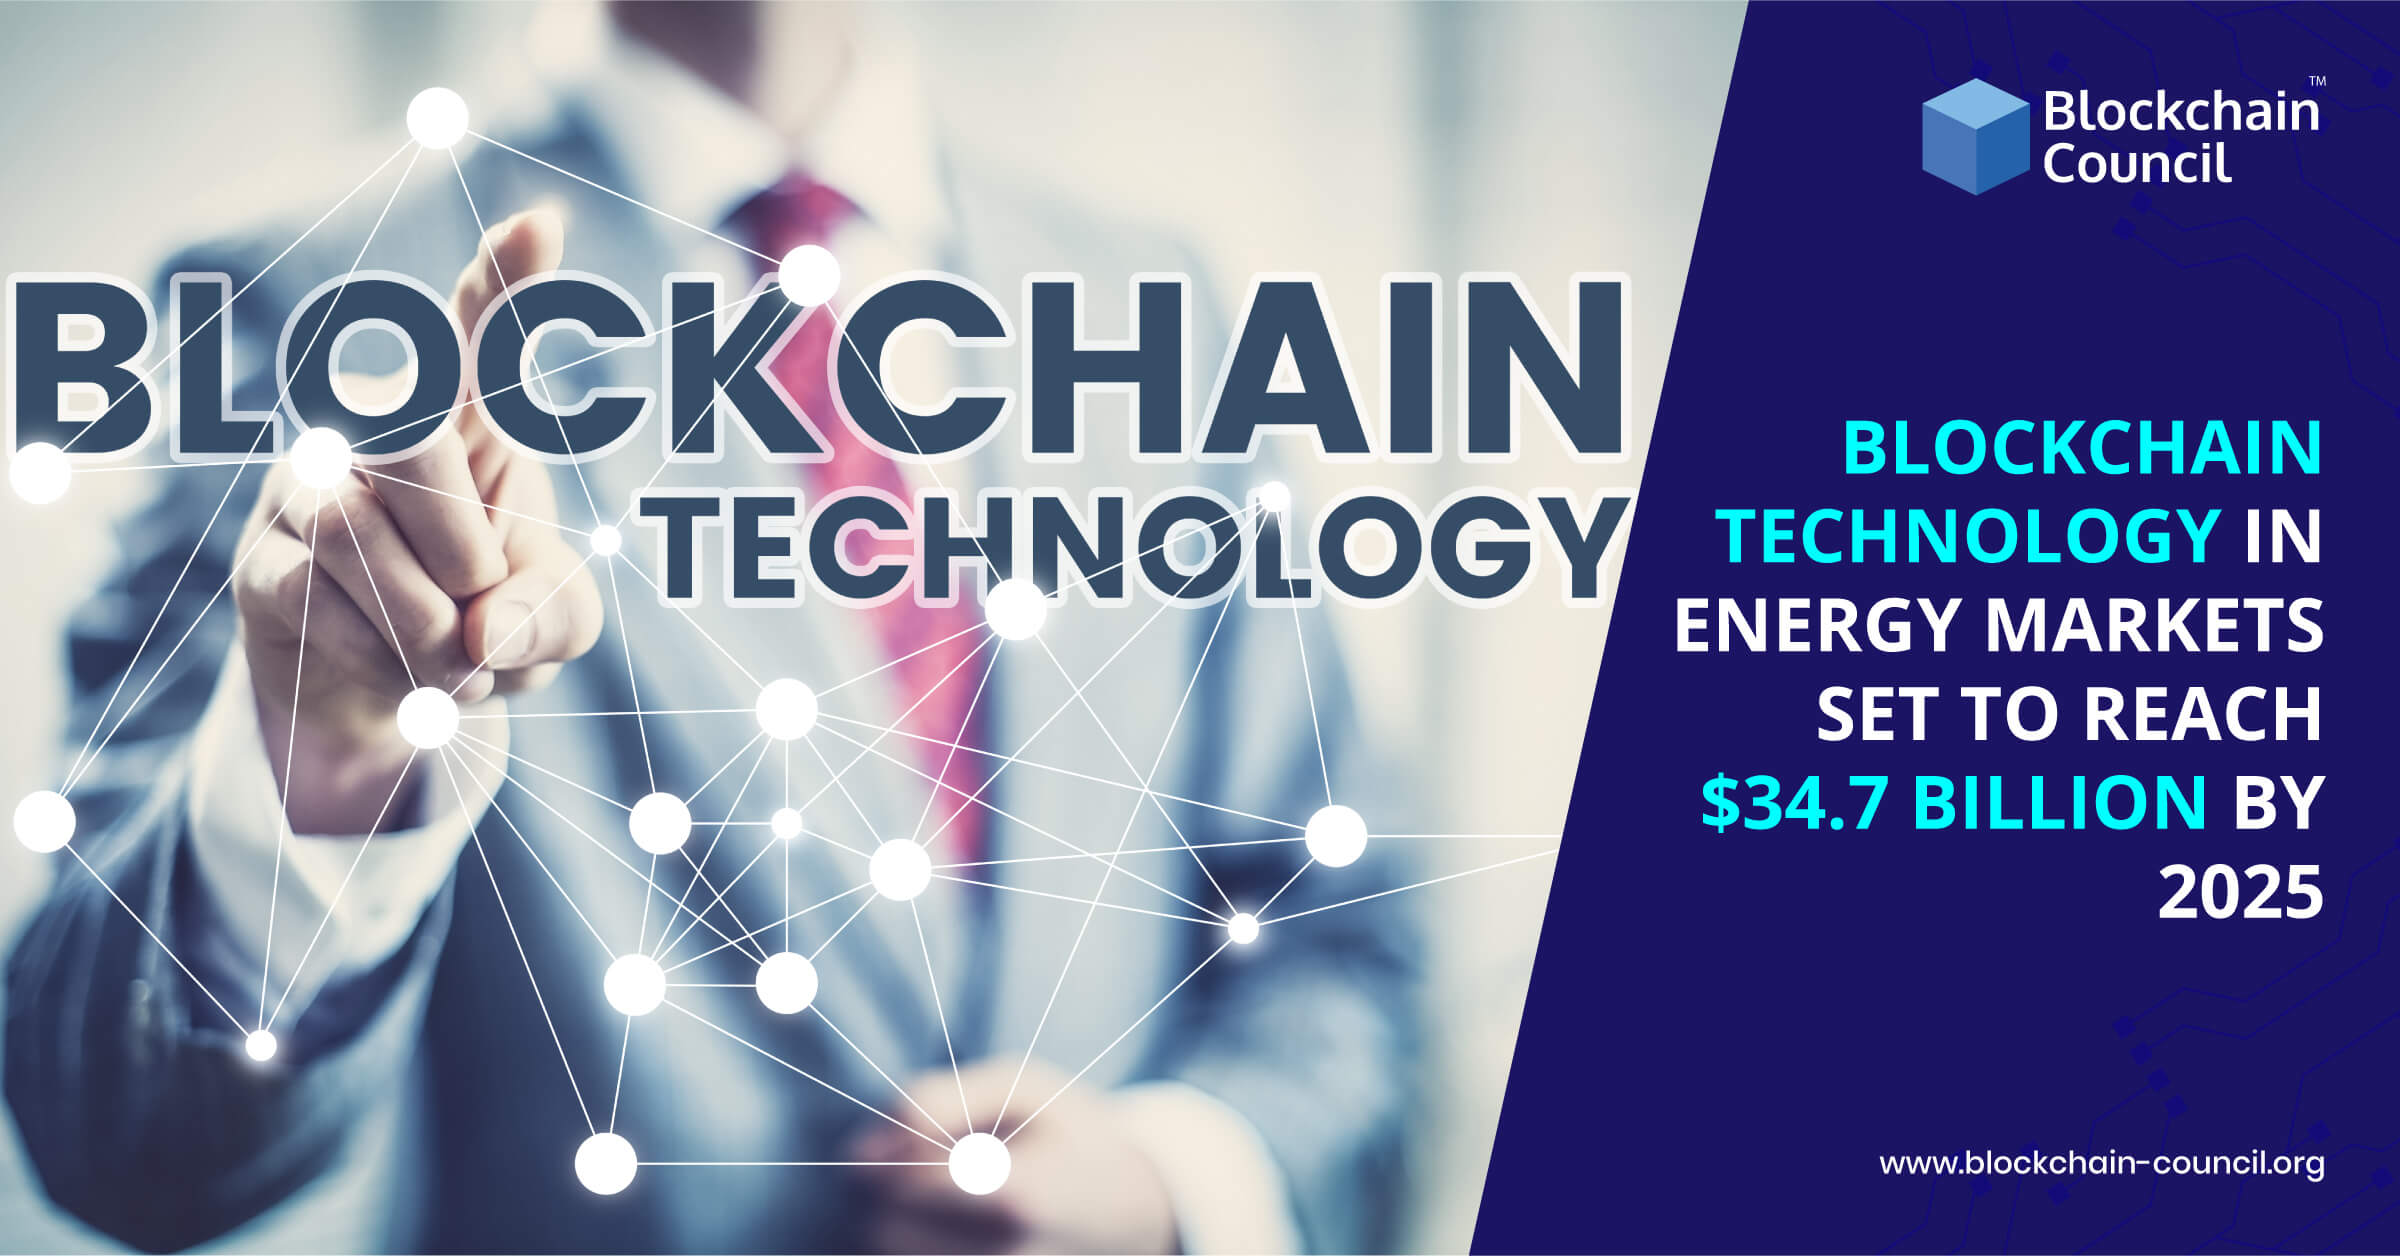 Blockchain Technology in Energy Markets Set to Reach $34.7 Billion by 2025